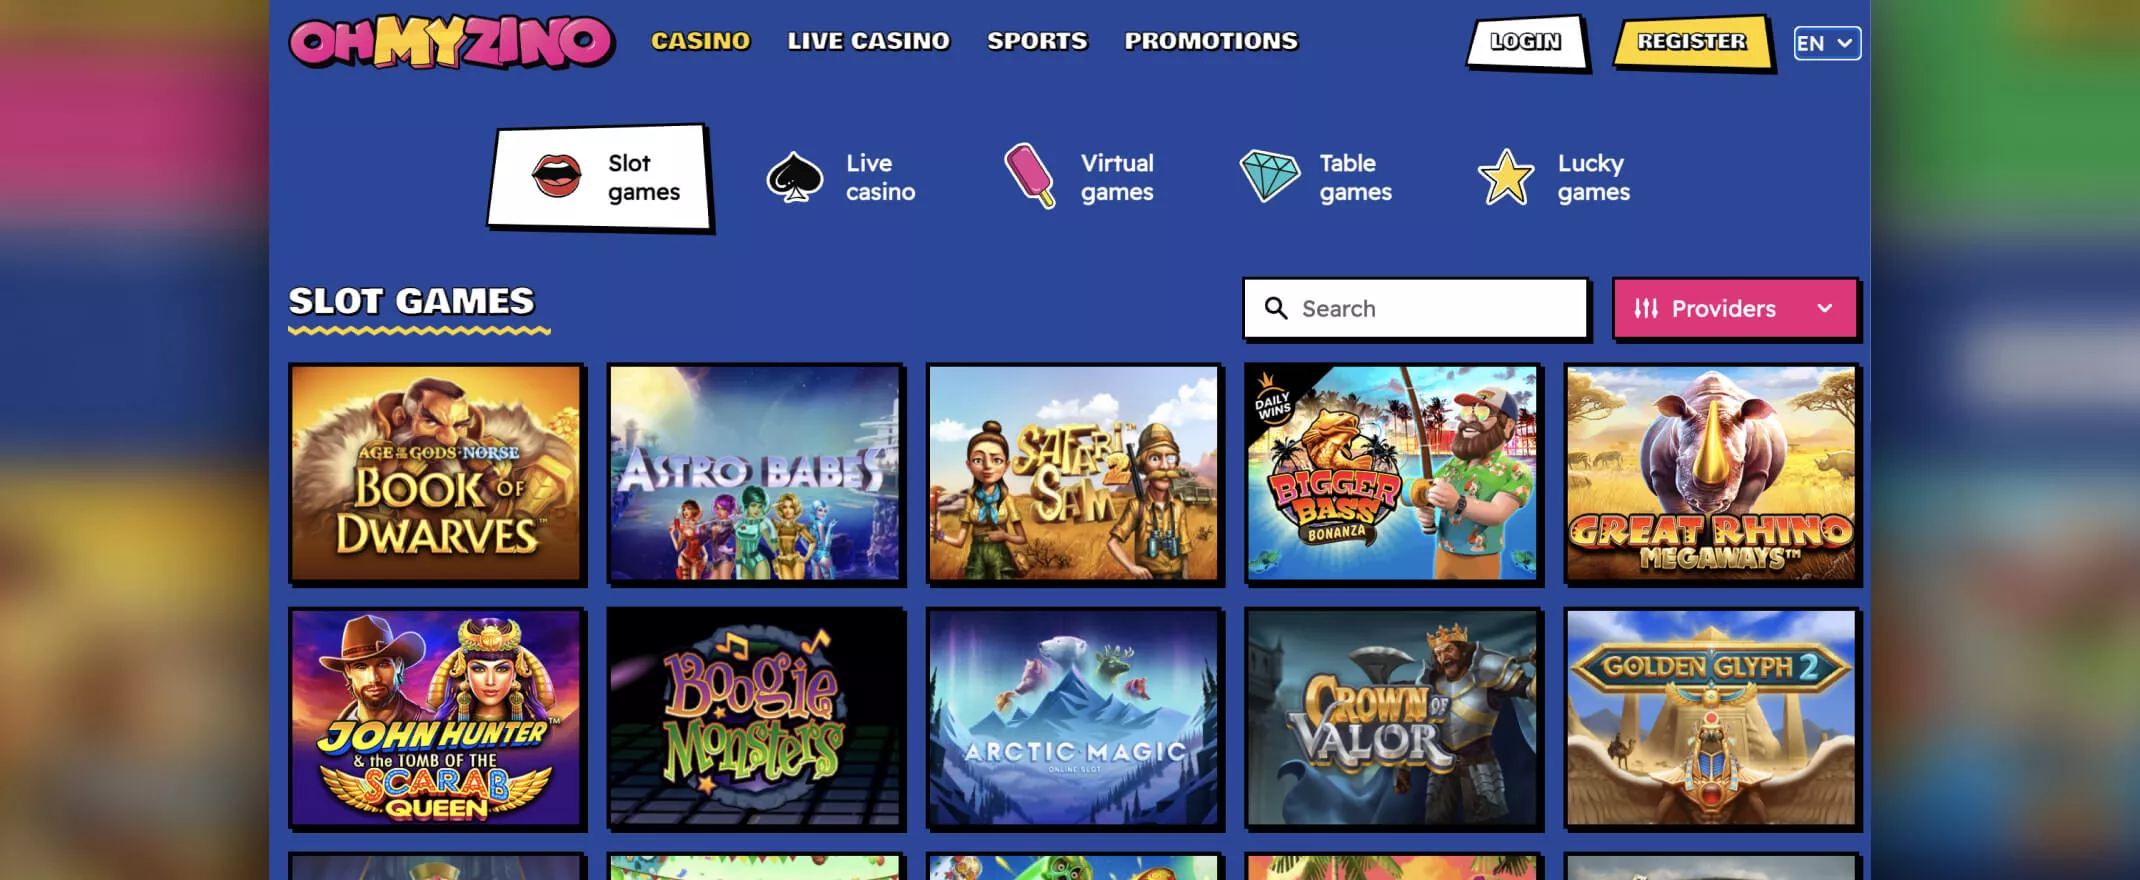 ohmyzino casino games screenshot